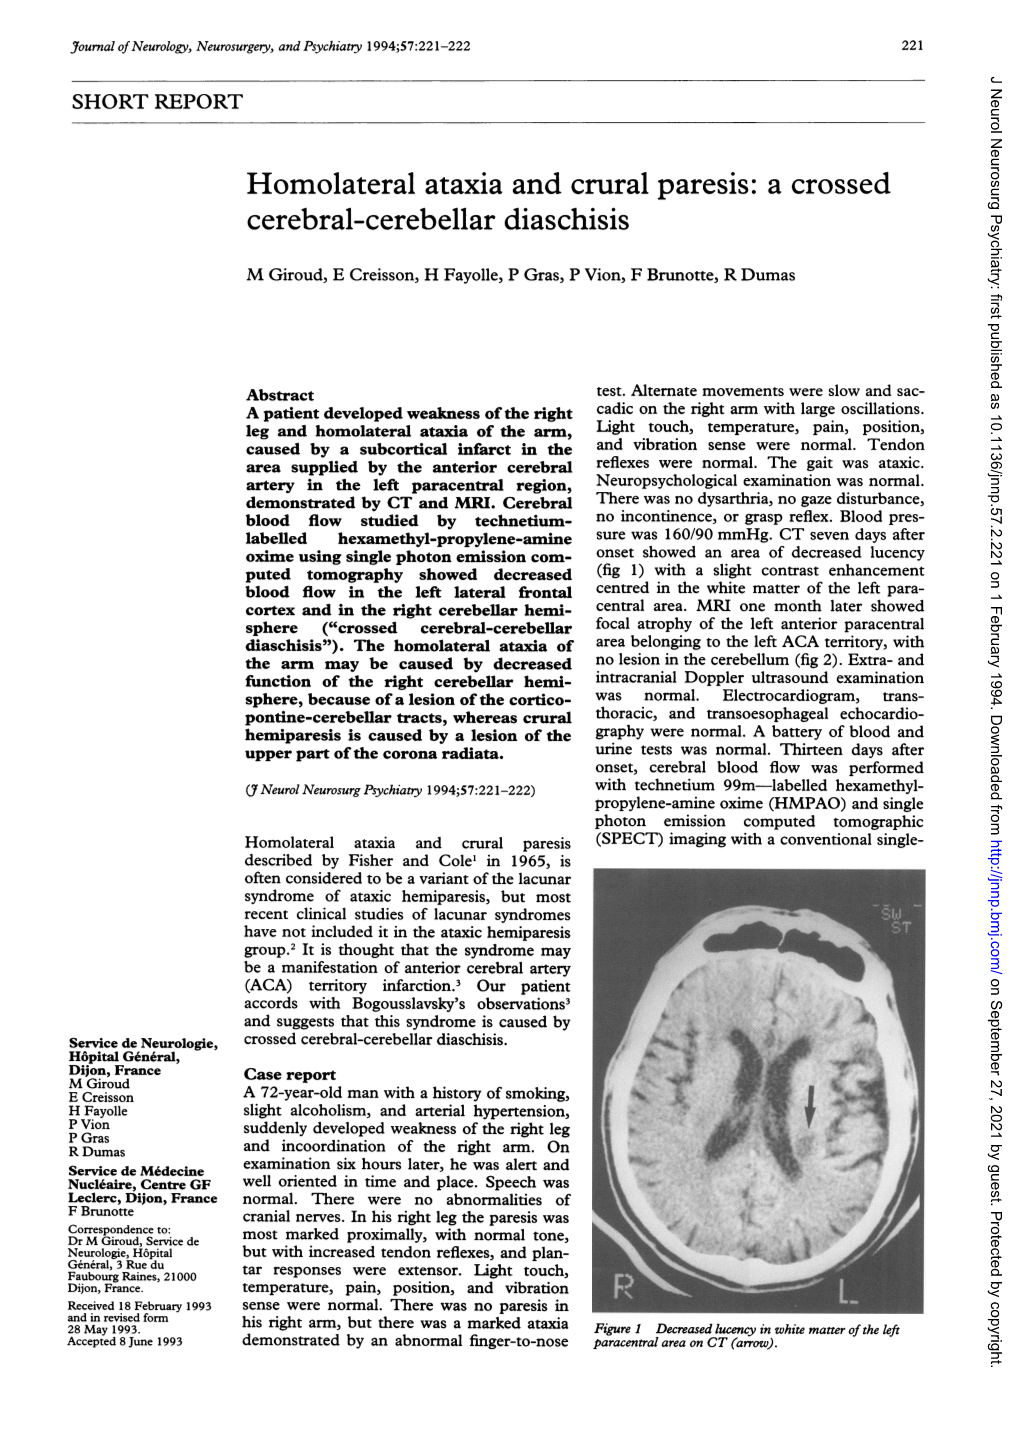 A Crossed Cerebral-Cerebellar Diaschisis